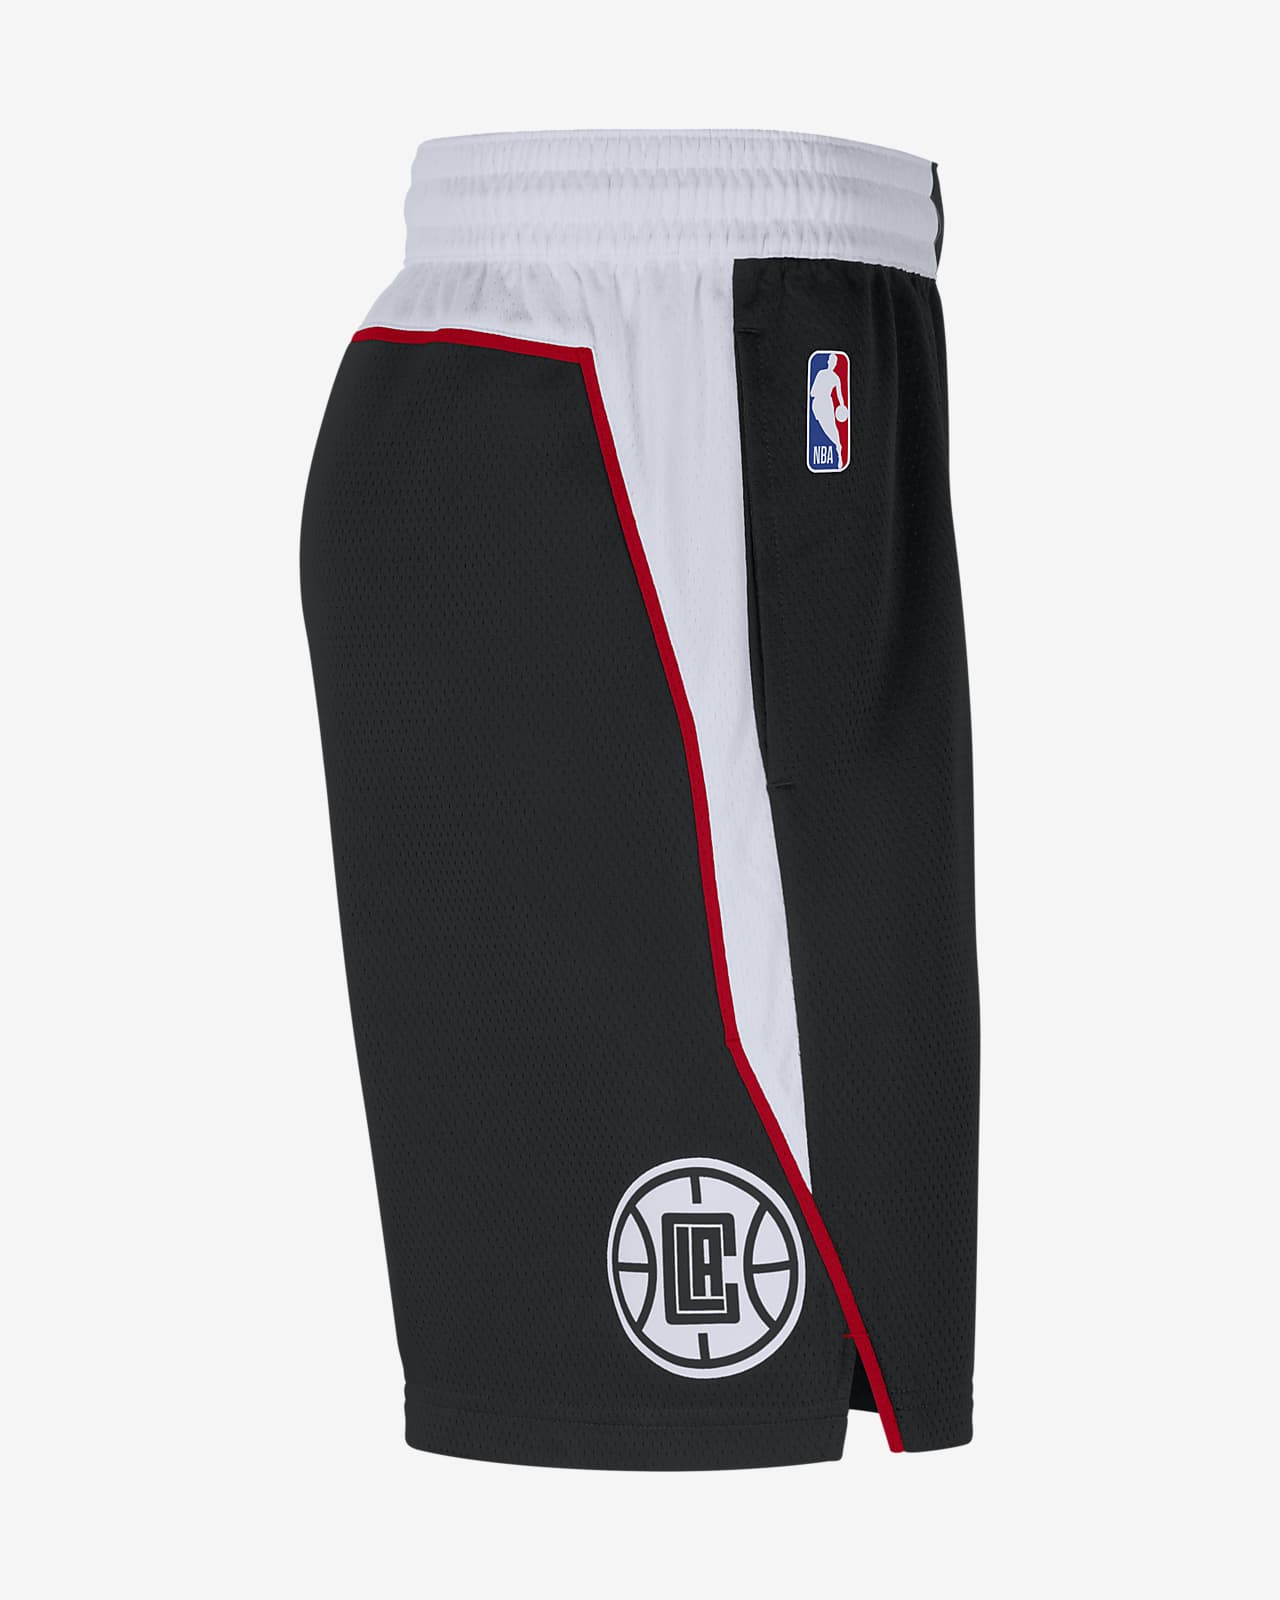 LA Clippers City Edition 2020 Men's Nike NBA Swingman Shorts